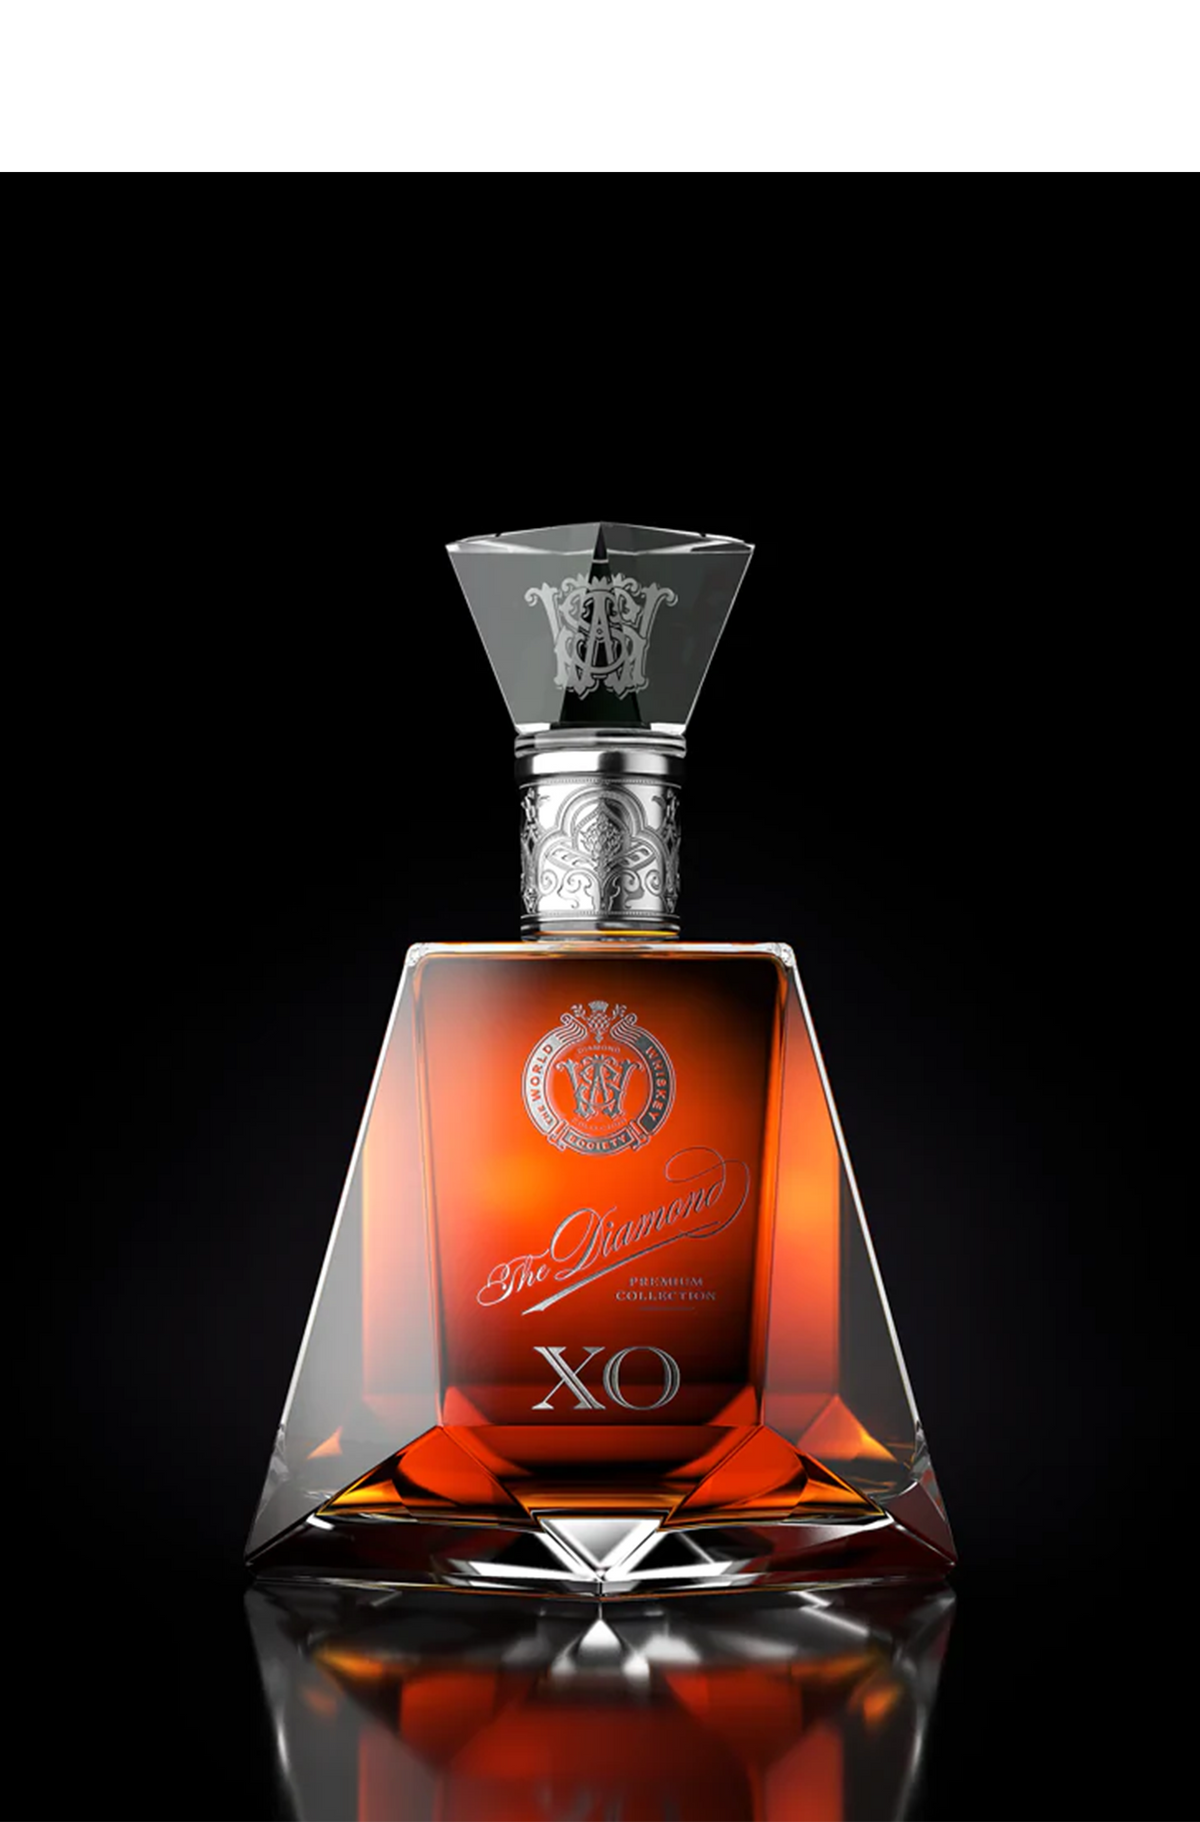 XO Cognac finished in Mizunara Barrel